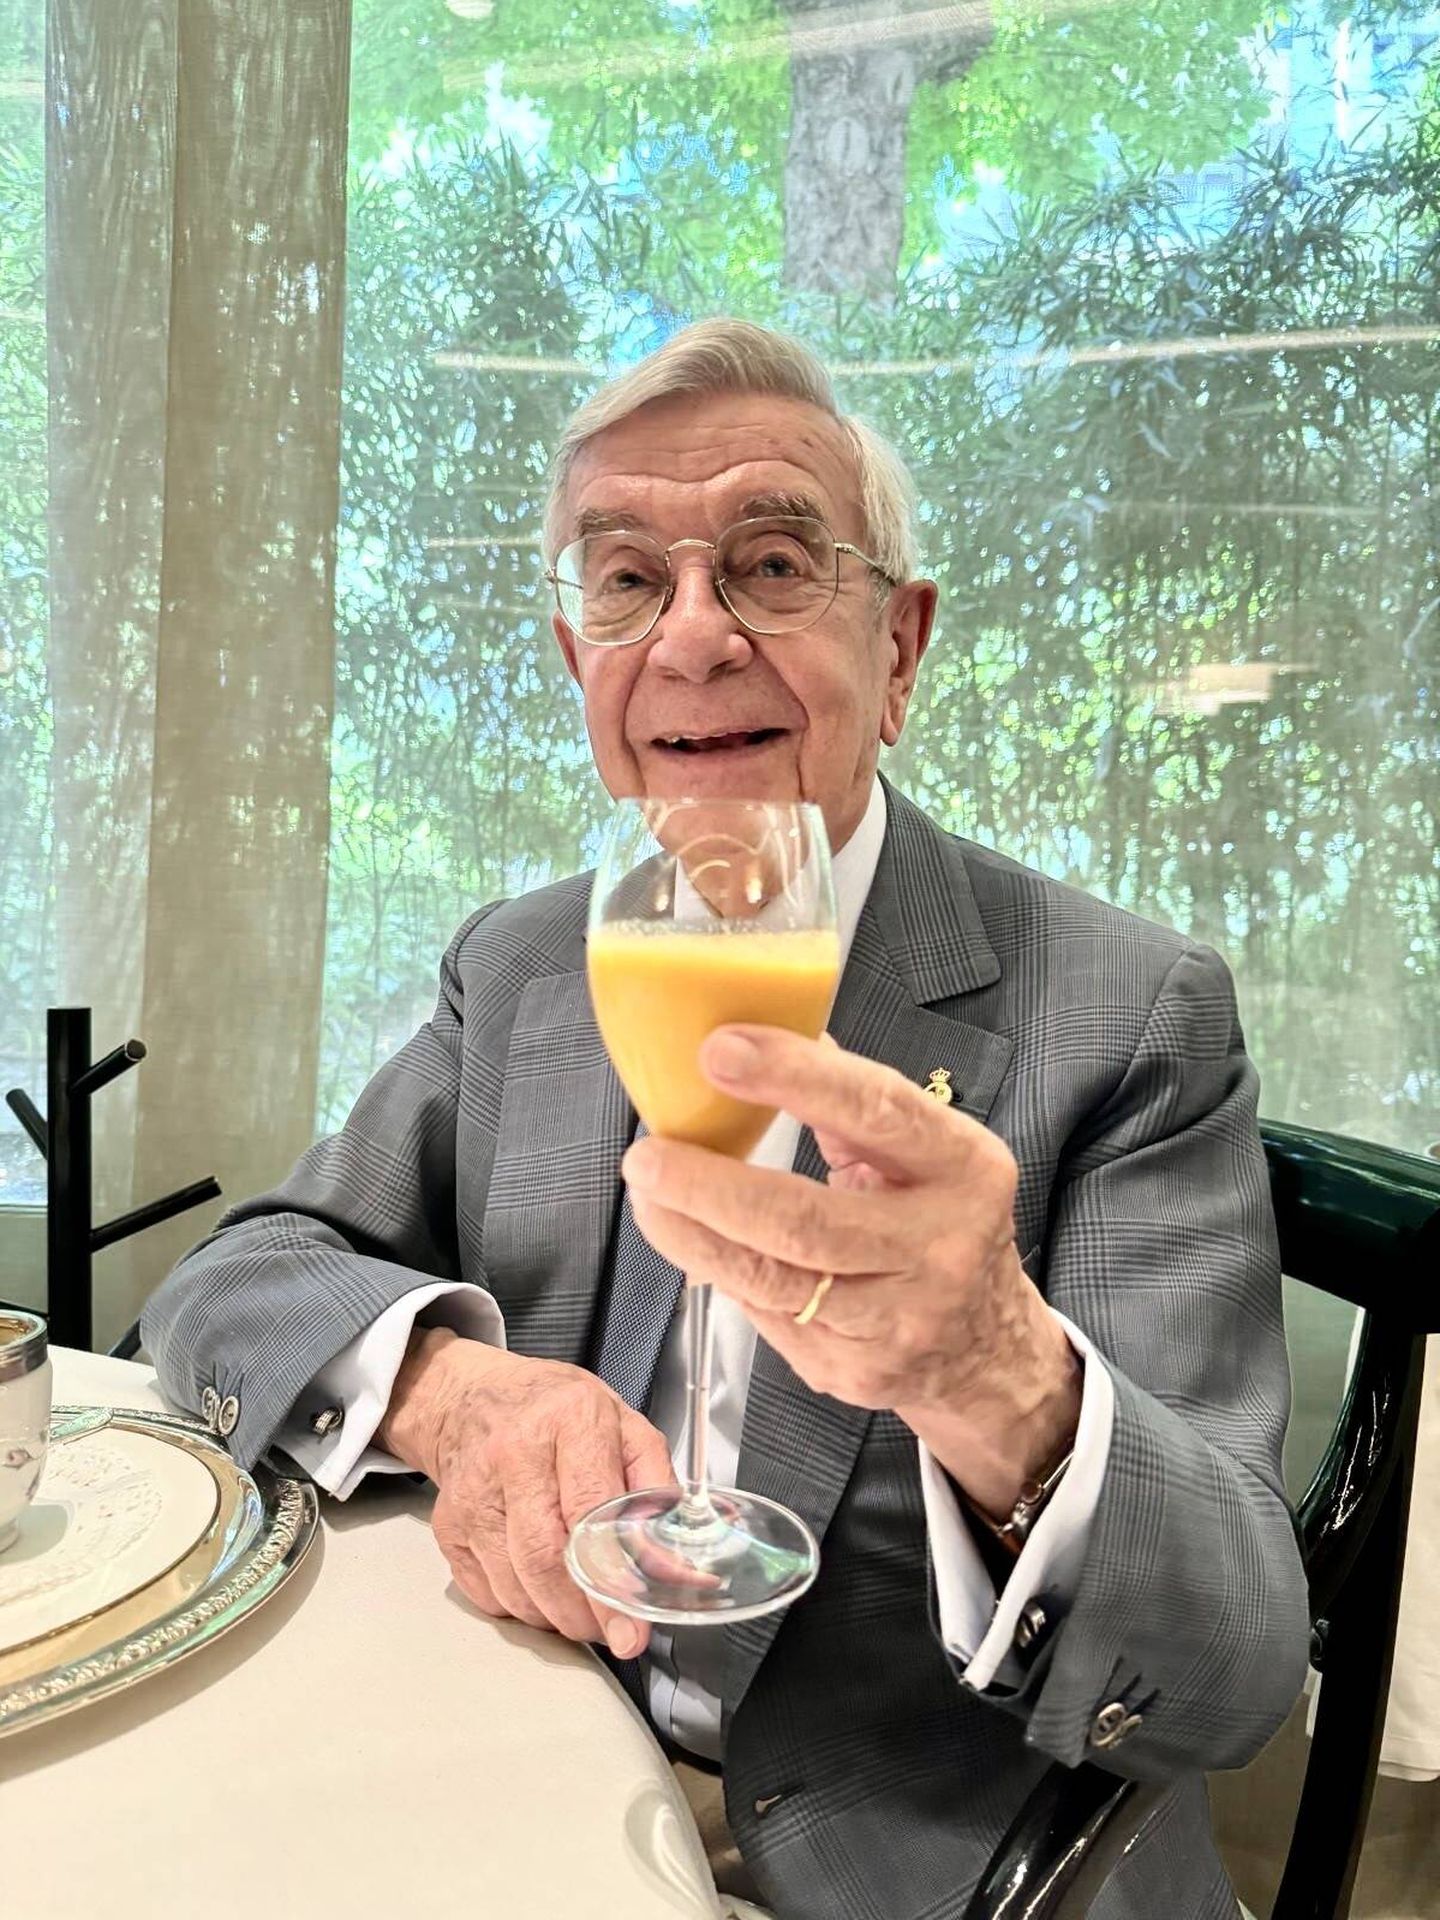 Rafael Ansón en el restaurante Zalacaín tomando un gazpacho en copa de champagne (Rafael Ansón)